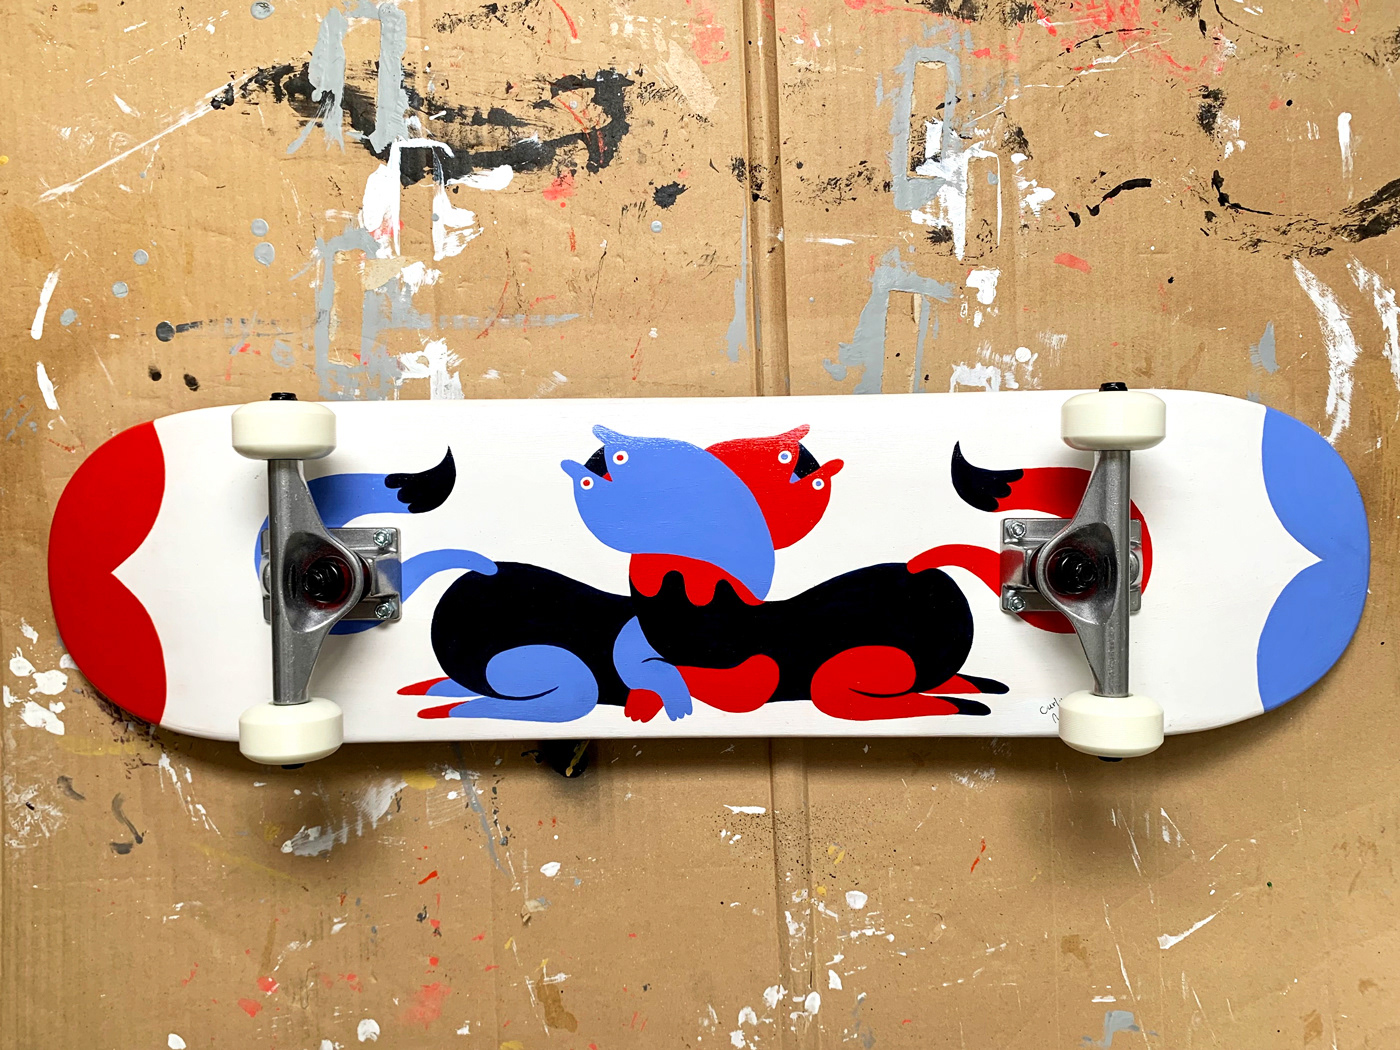 acrylicpaint  characterdesign Drawing  ILLUSTRATION  painting   skateboard